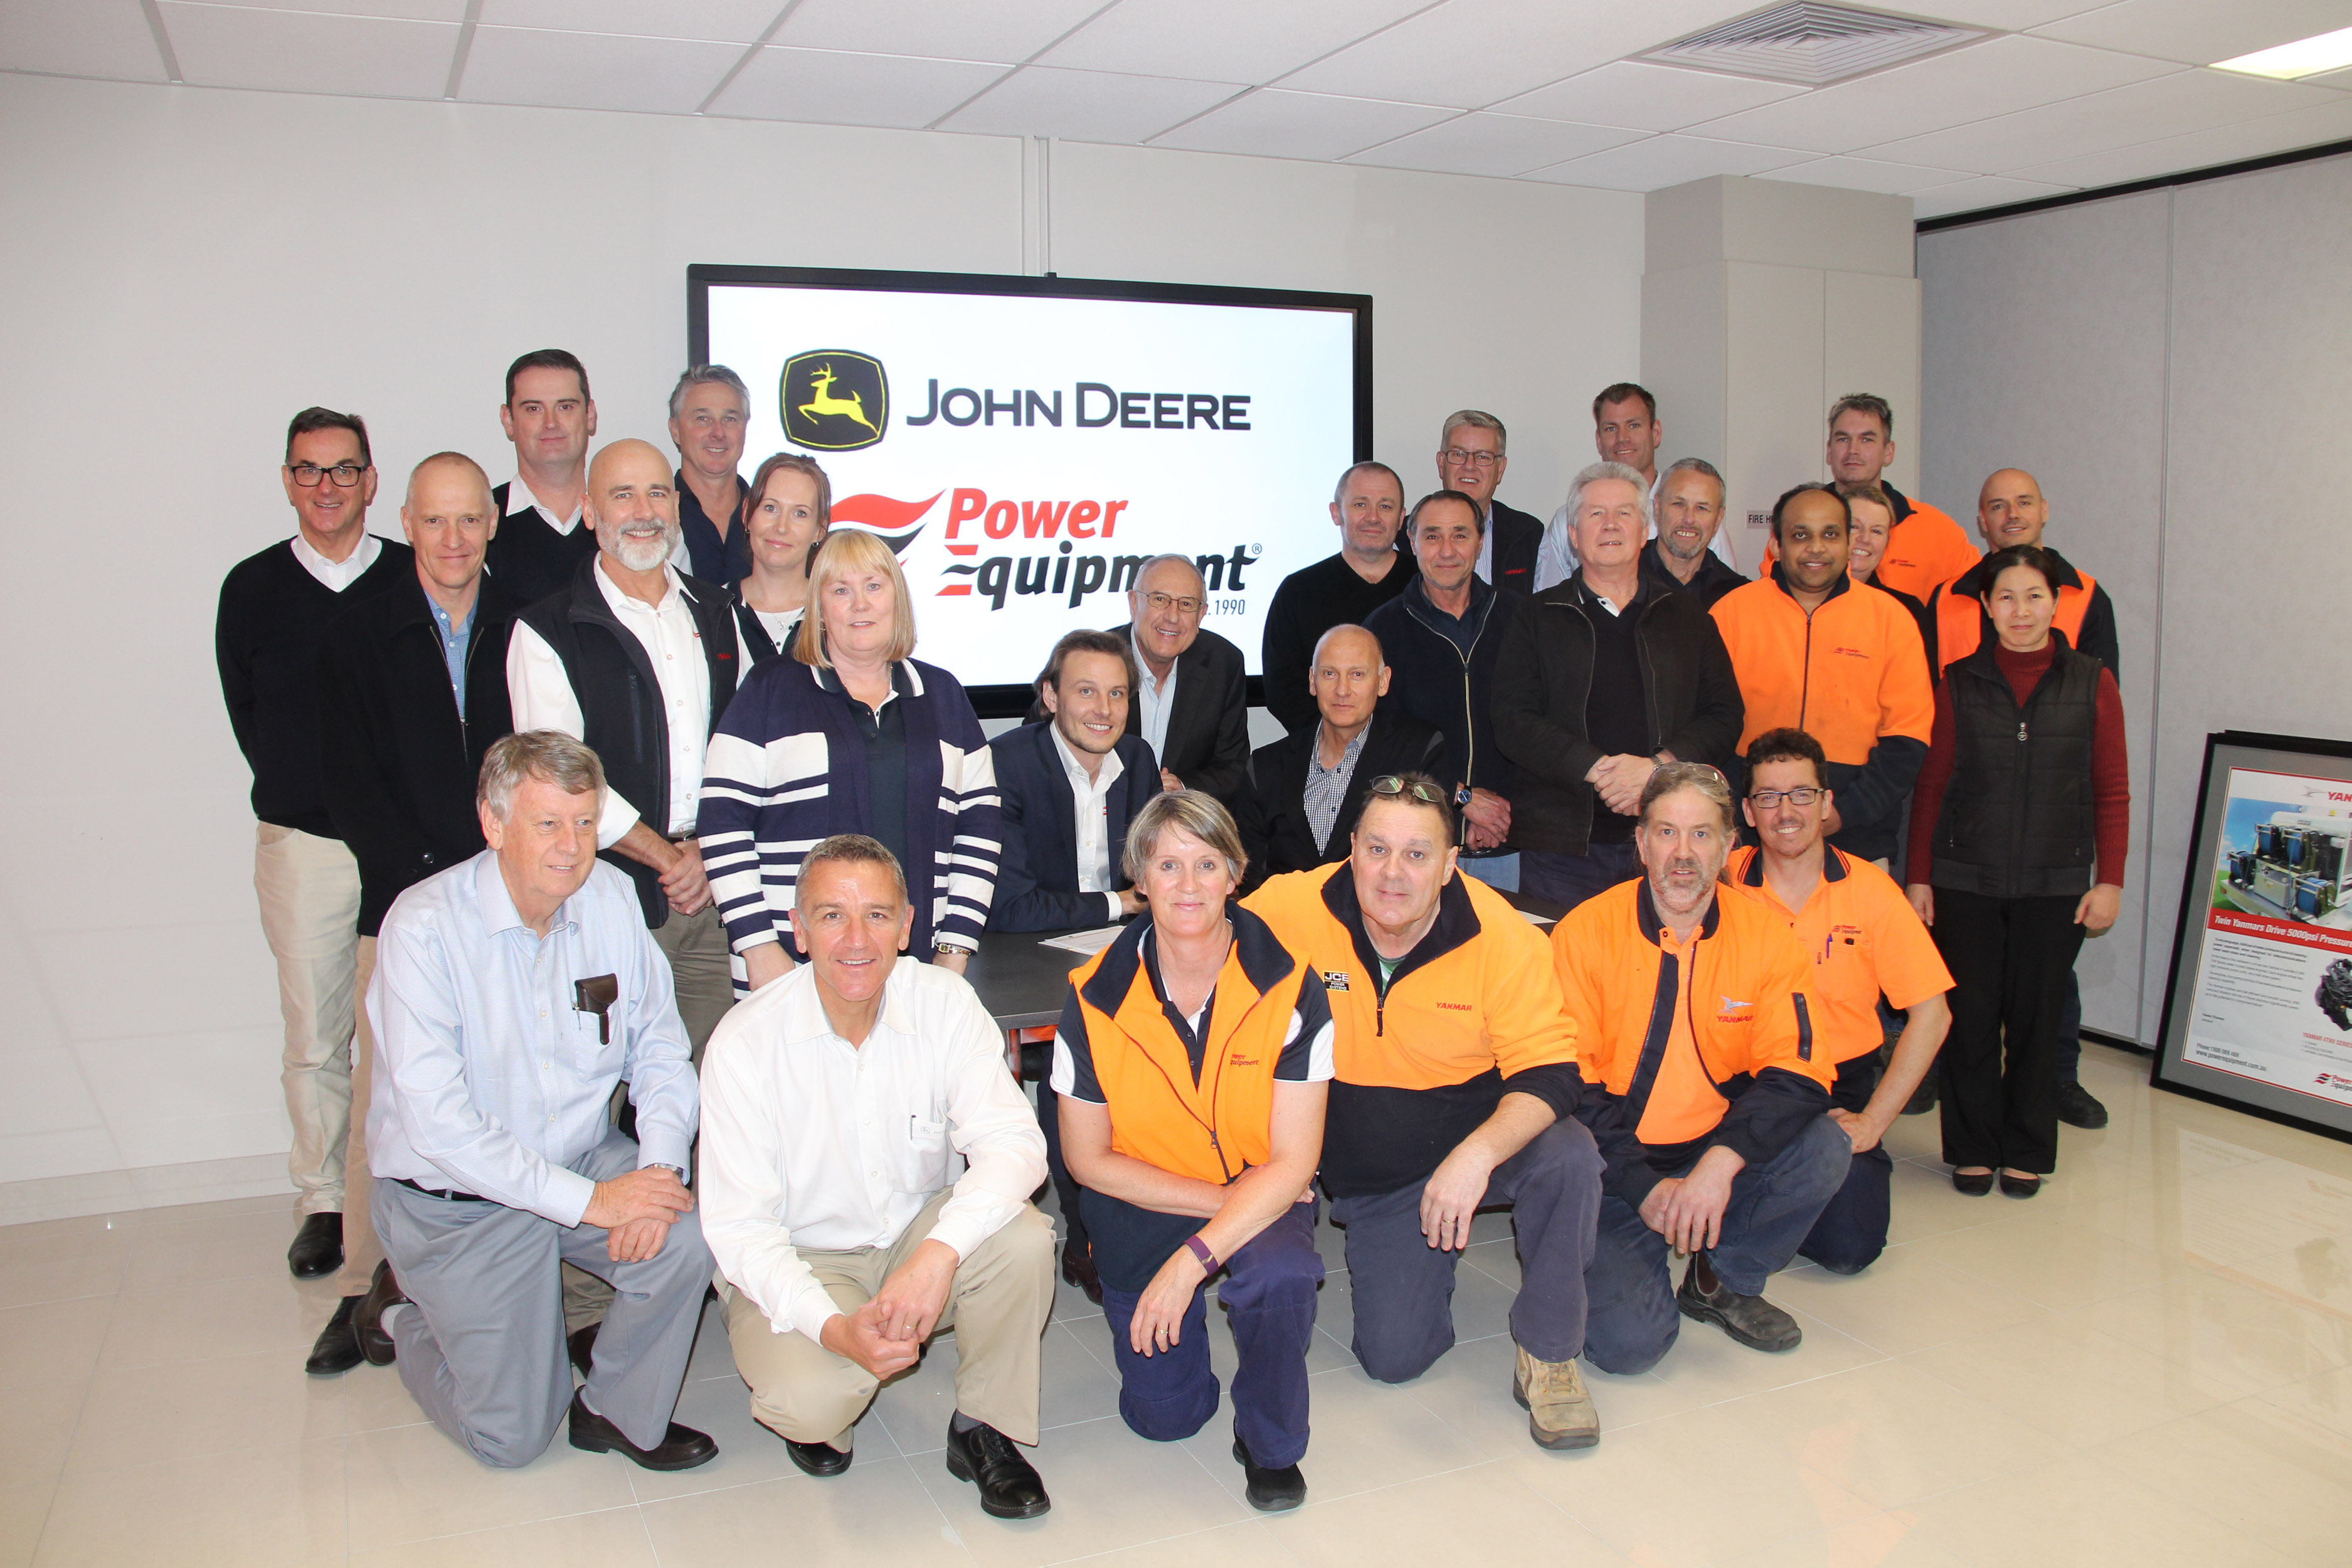 John Deere Power systems